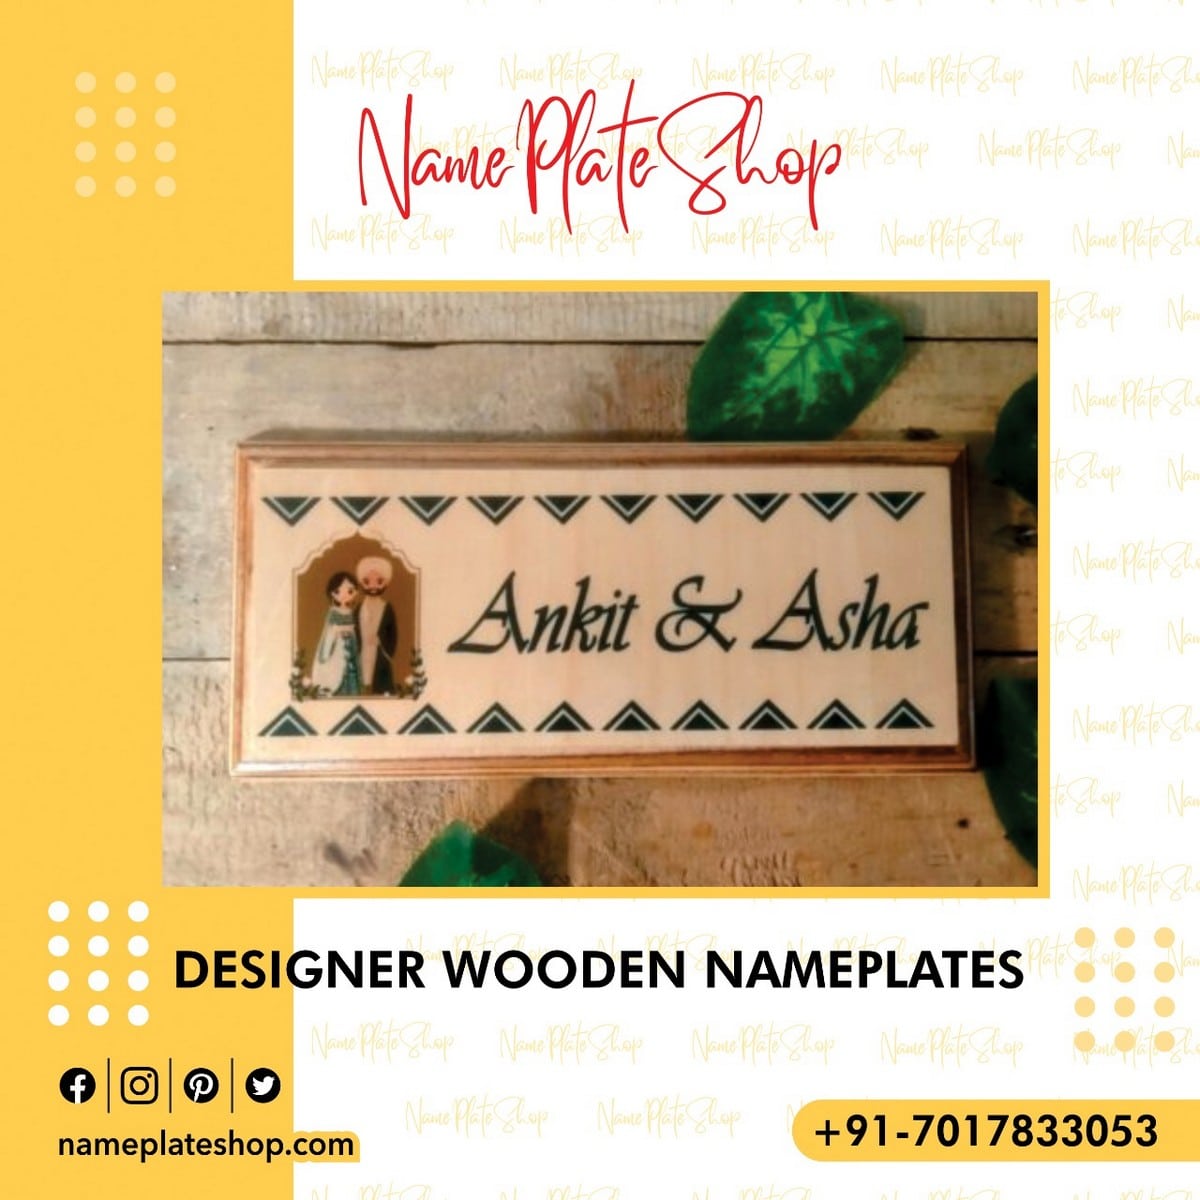 Designer Wooden Nameplates